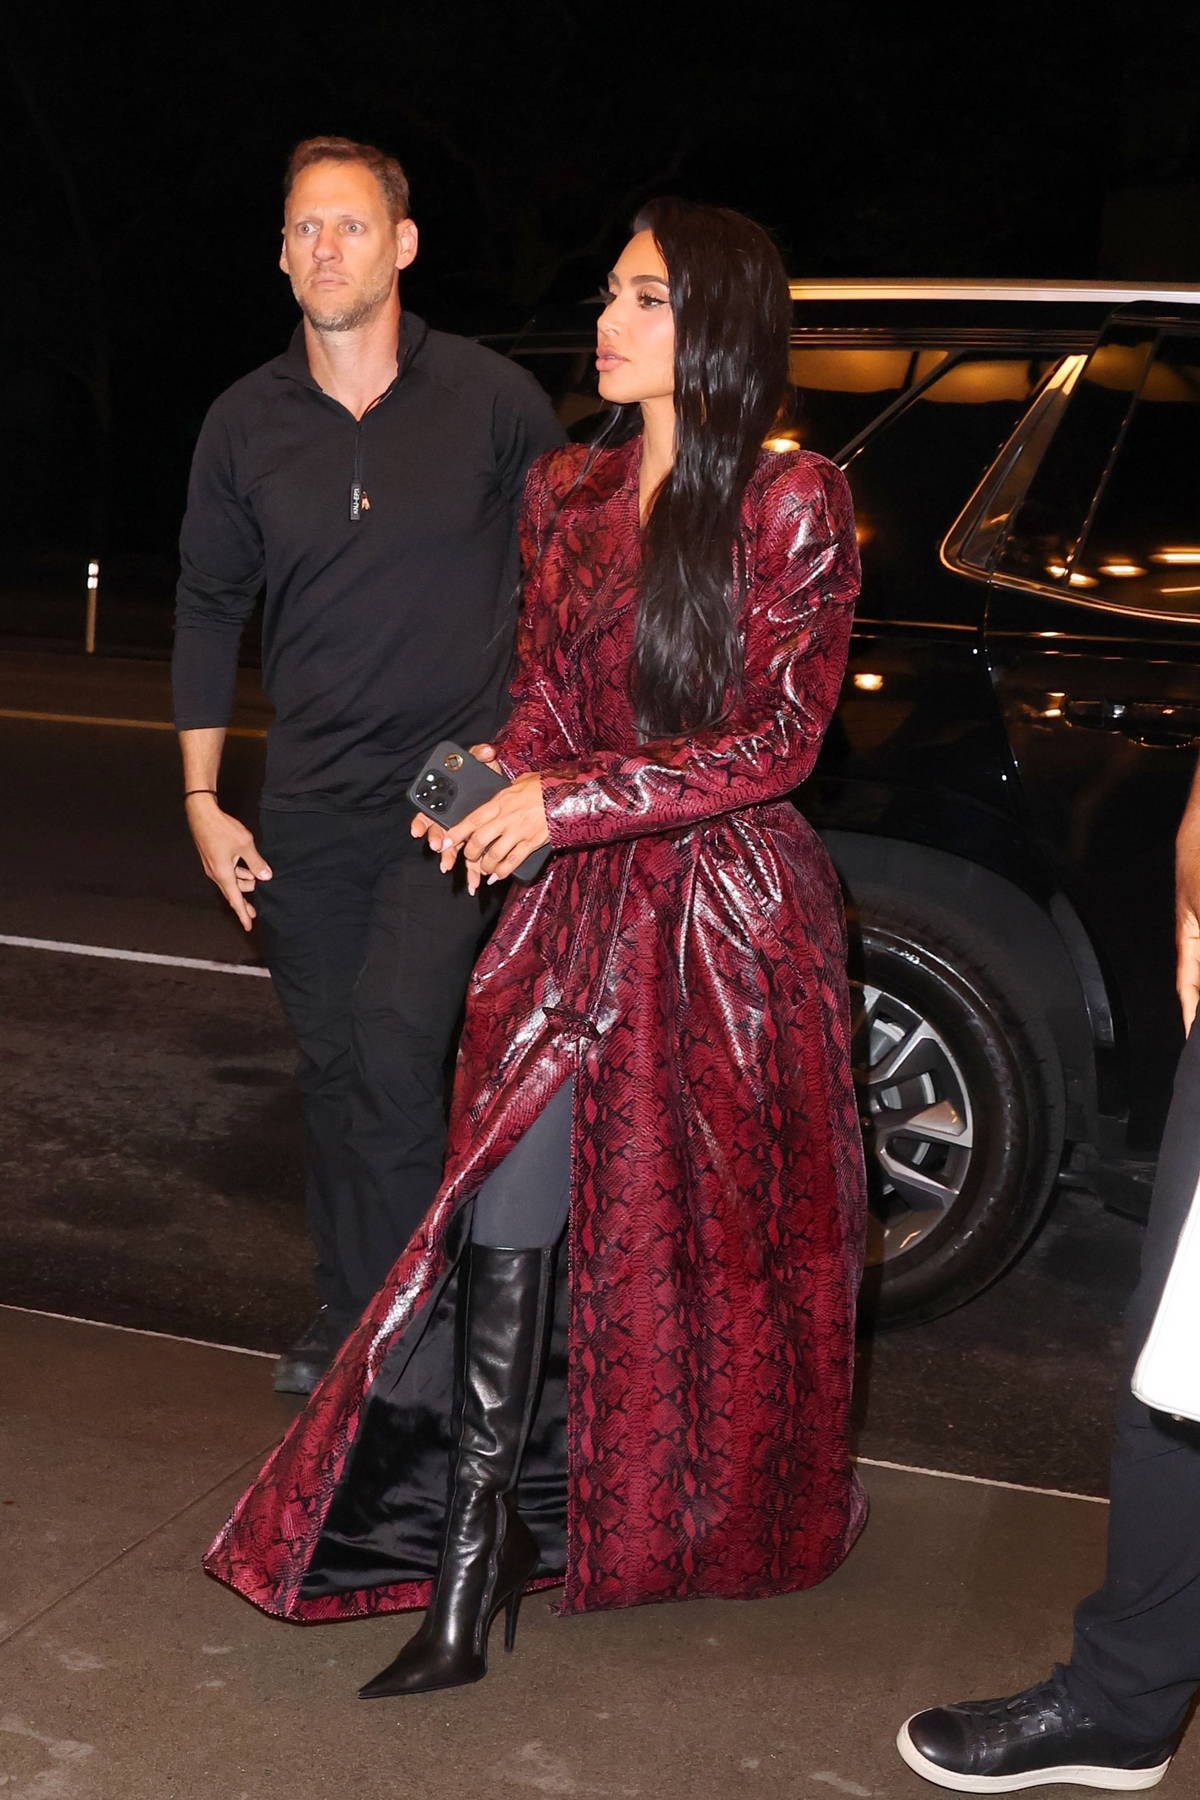 783 Kim Kardashian Reggie Bush Photos & High Res Pictures - Getty Images